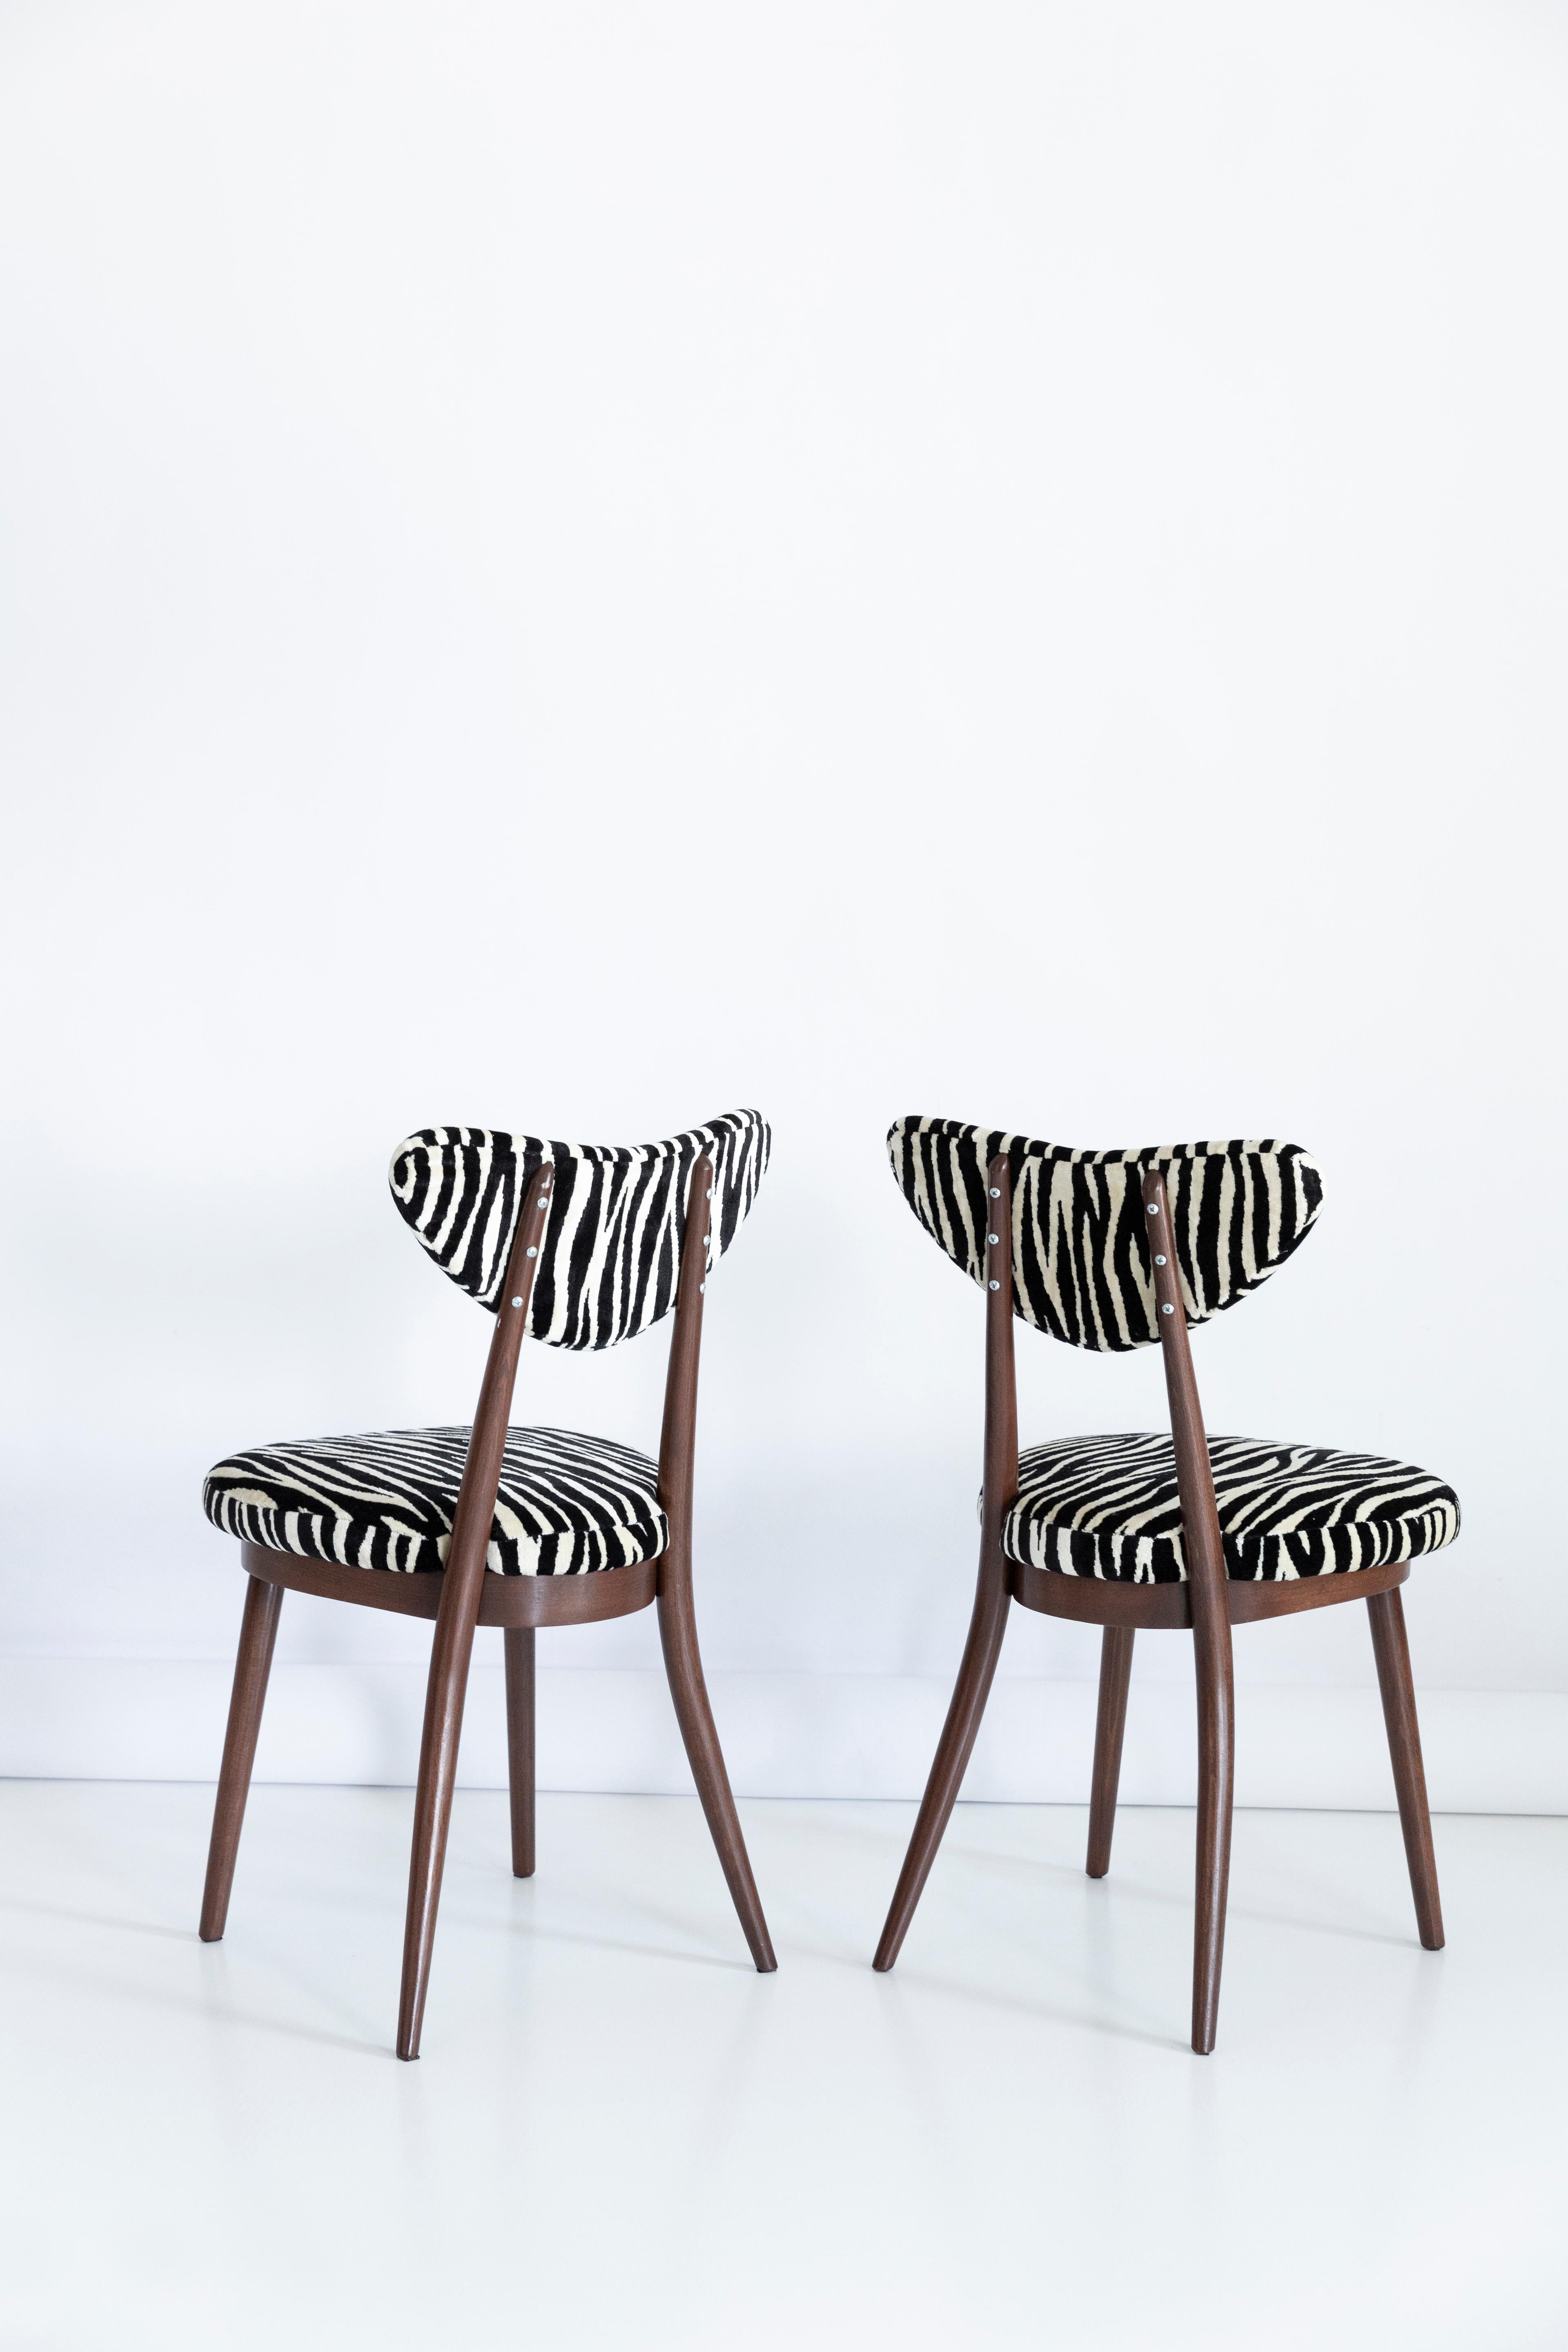 Set Midcentury Zebra Black White Heart Chairs, Hollywood Regency, Poland, 1960s For Sale 1